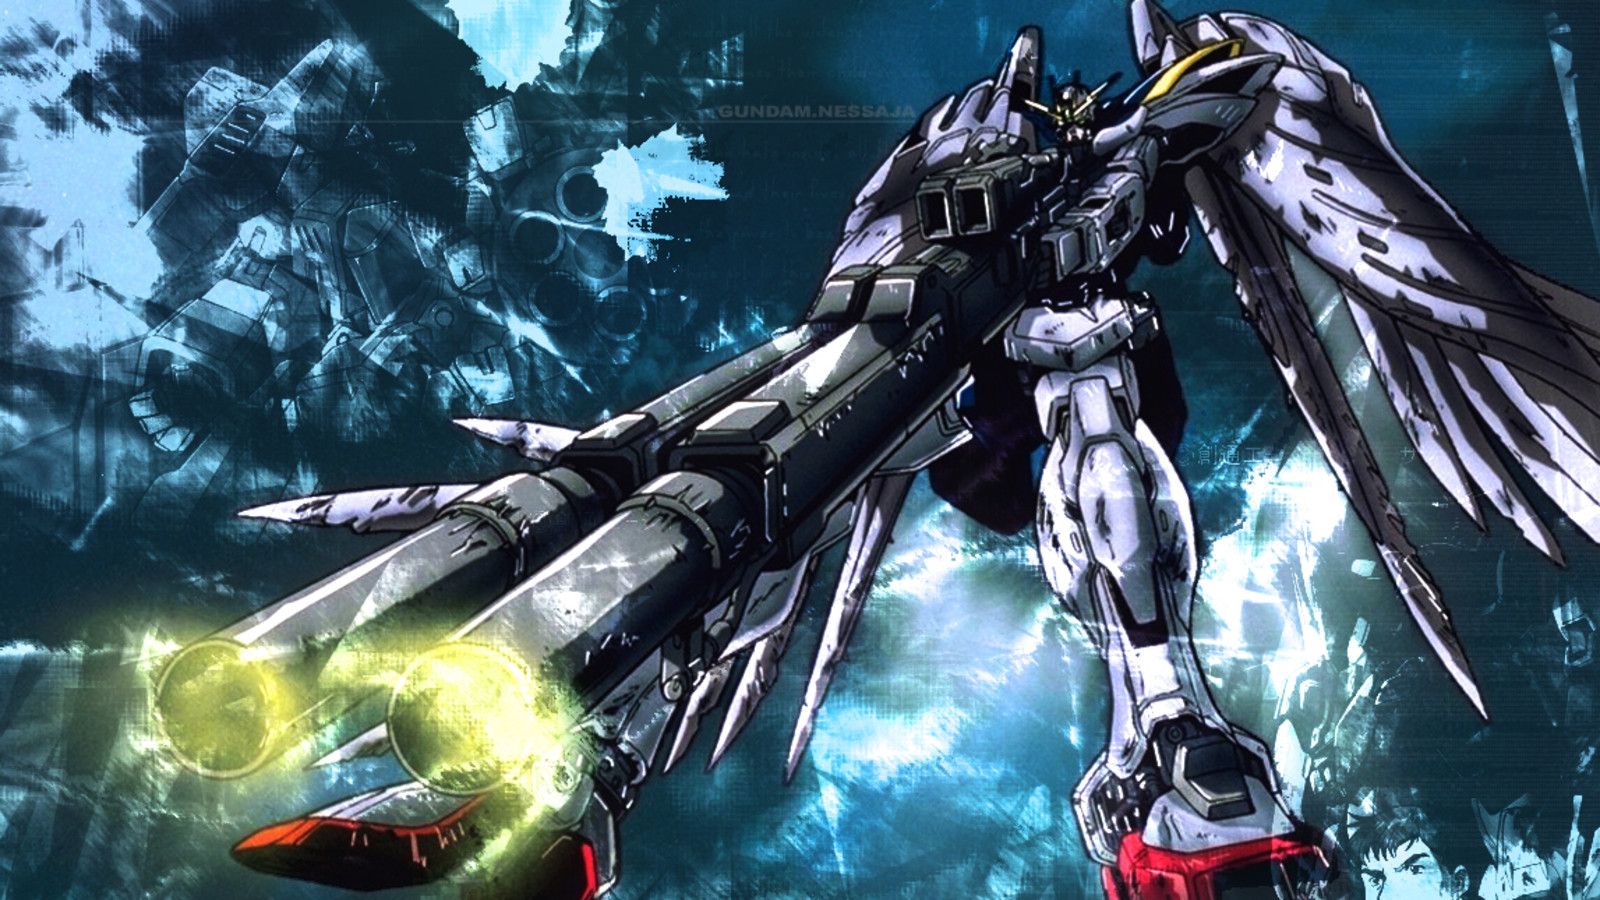 Best Gundam Wing Wallpaper HQ Backgrounds HD wallpapers Gallery